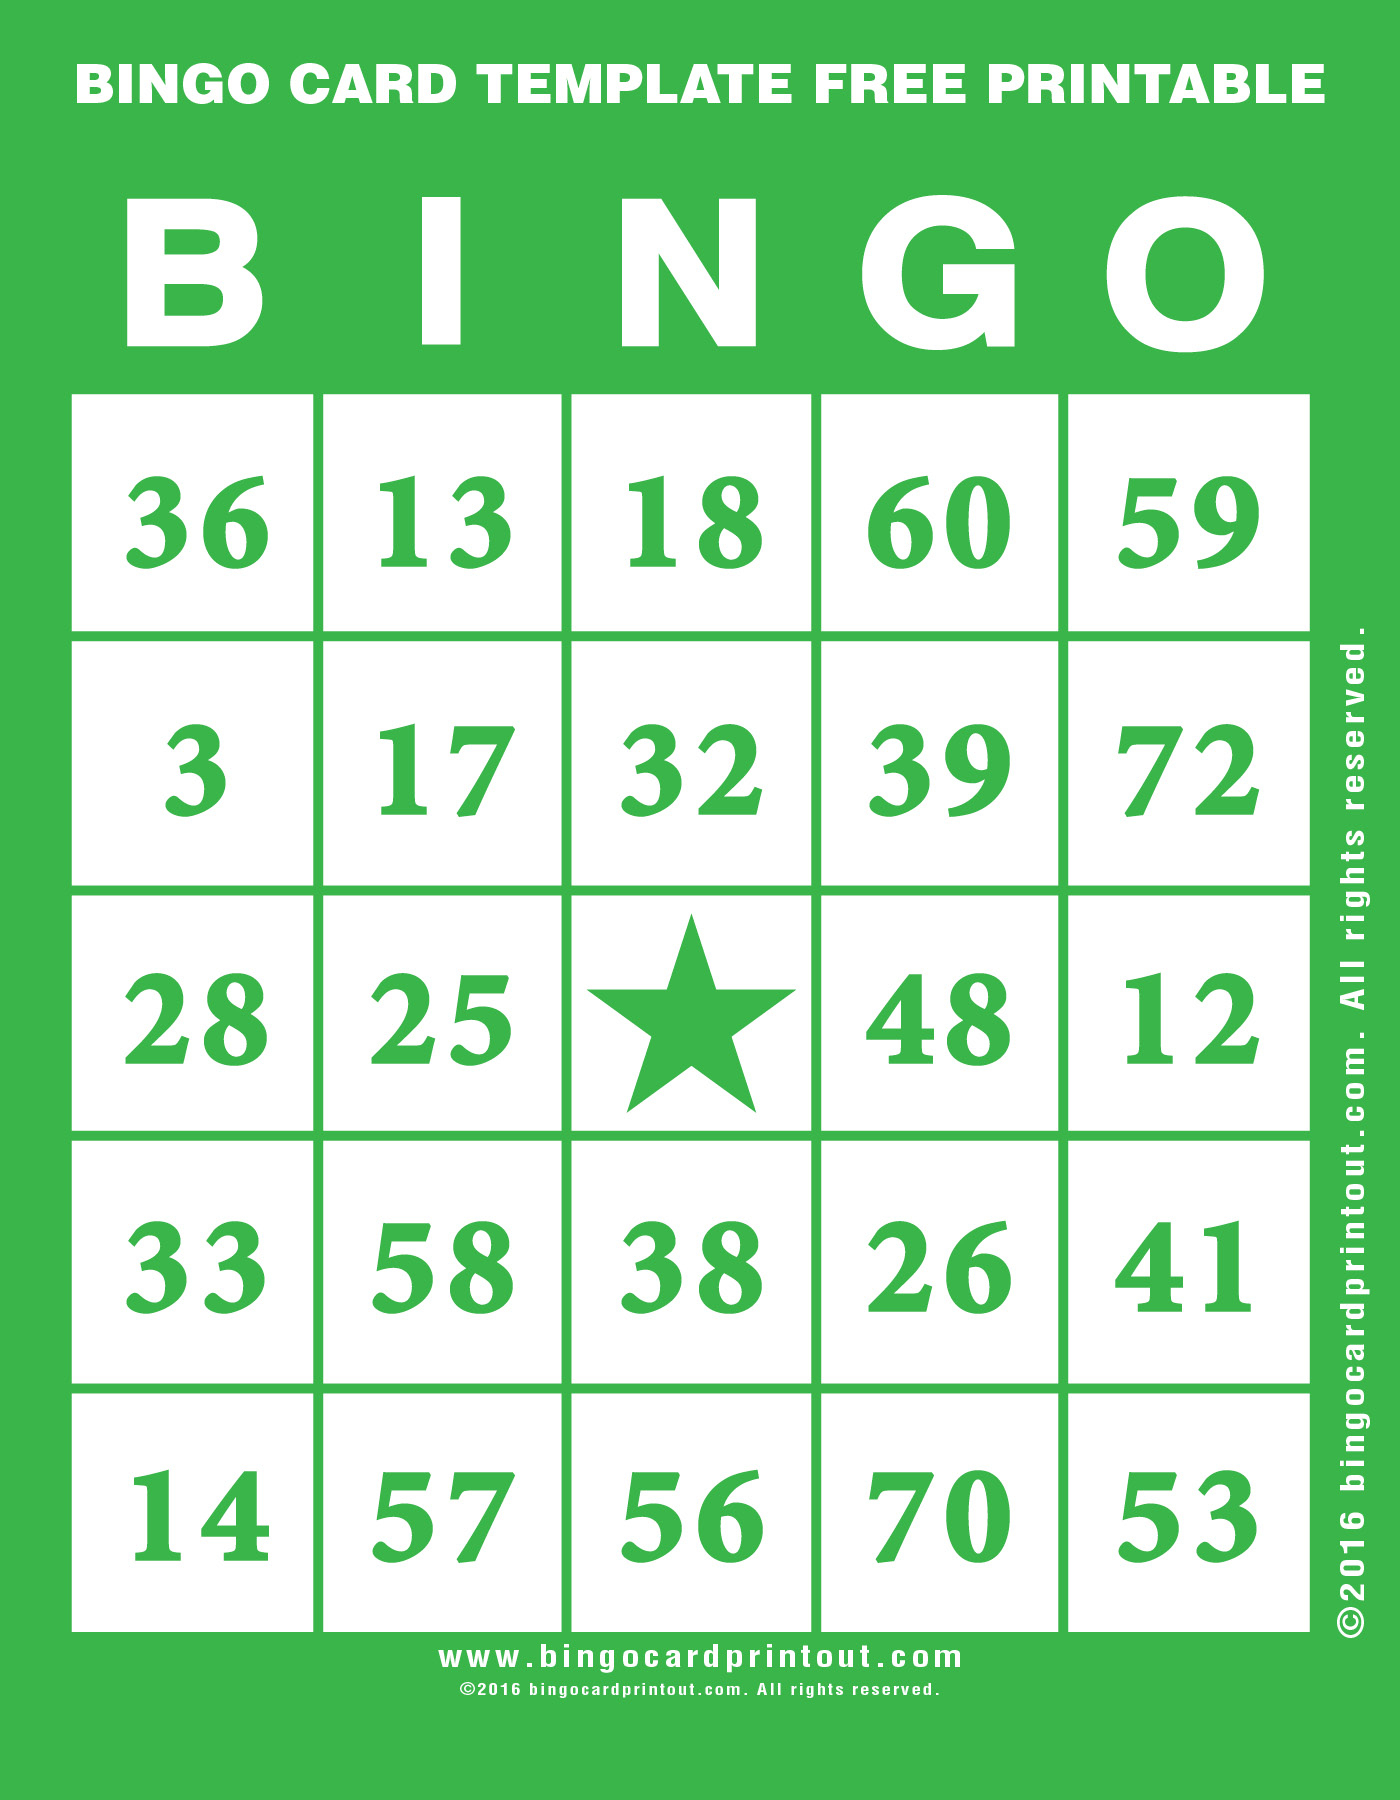 Bingo Card Template Free Printable - Bingocardprintout - Free Printable Bingo Cards For Large Groups